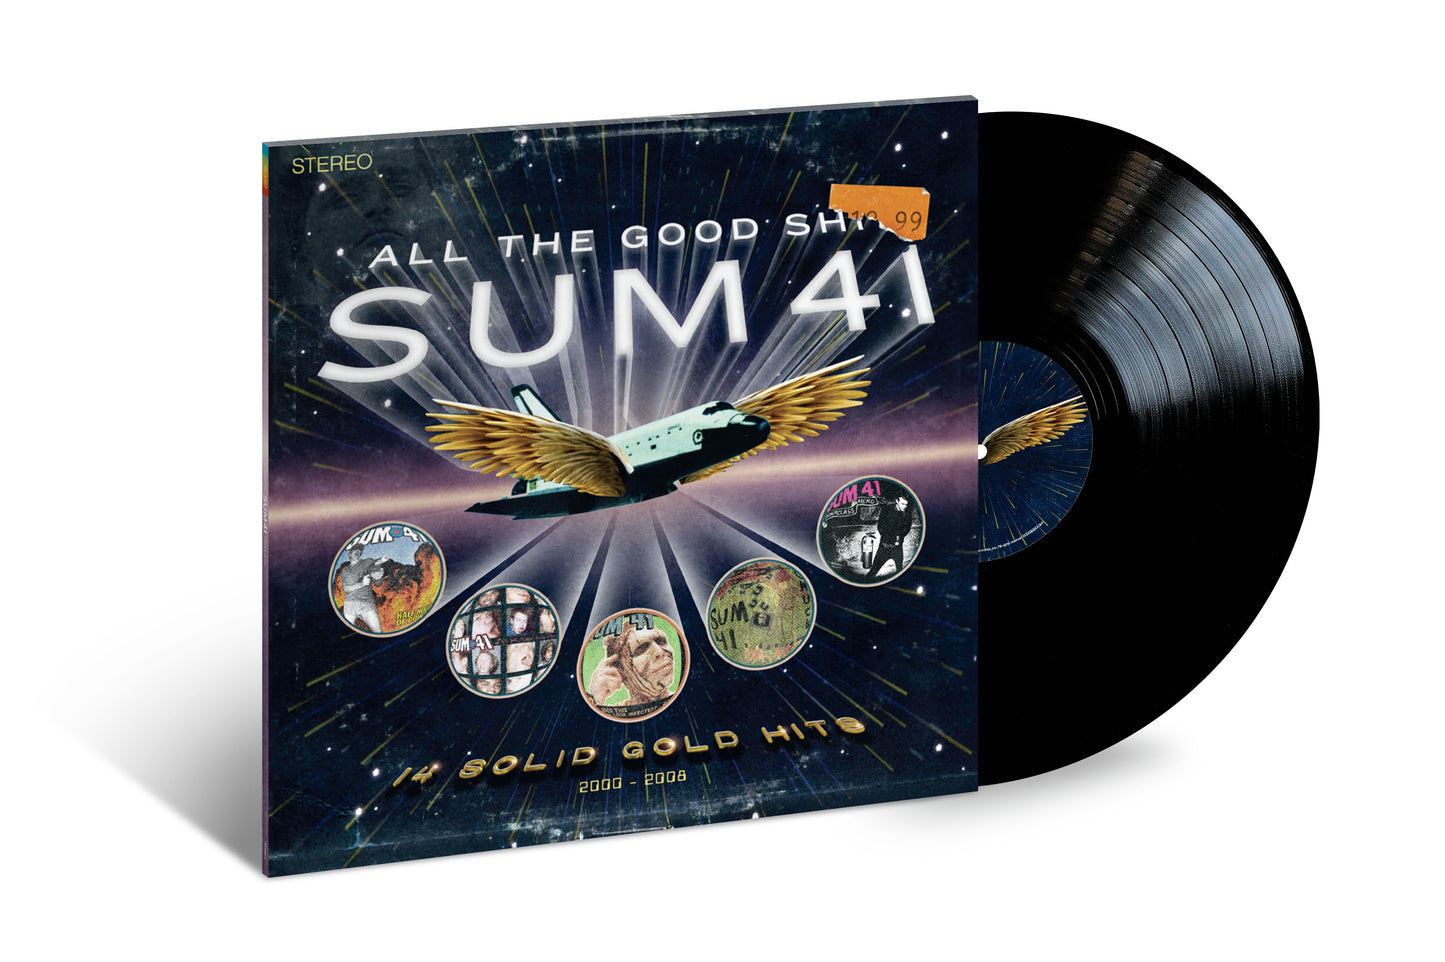 Sum 41 – Pieces (CDr) - Discogs